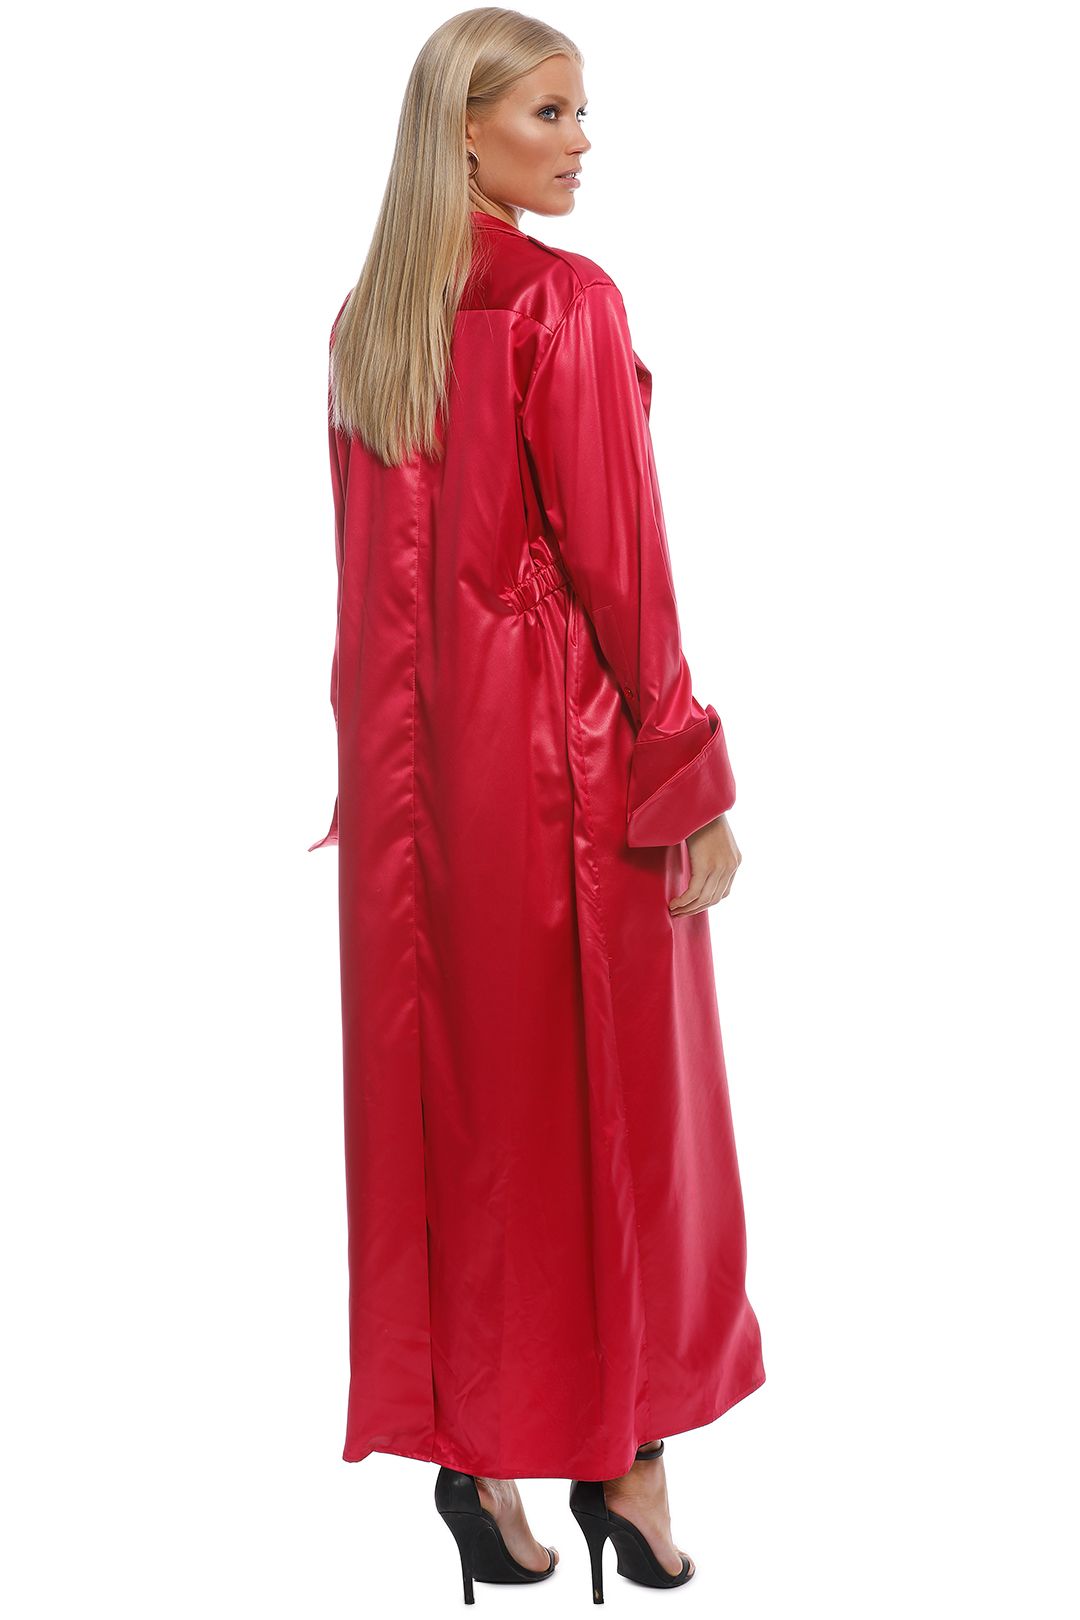 Ellery - Prophet Stand Collar Dress - Red - Back